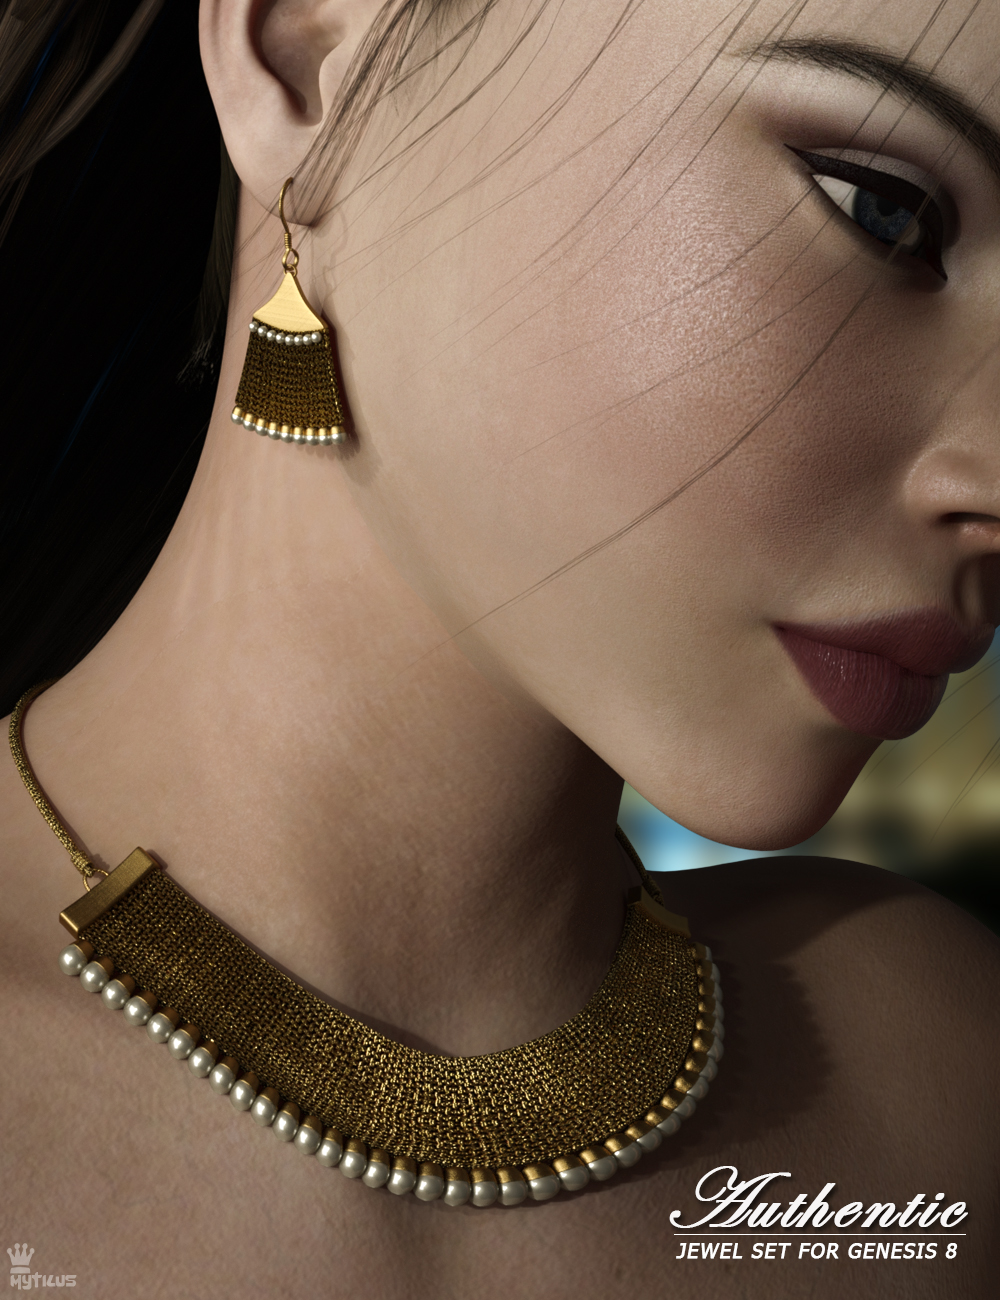 Authentic Jewel Set for Genesis Female(s) by: Mytilus, 3D Models by Daz 3D